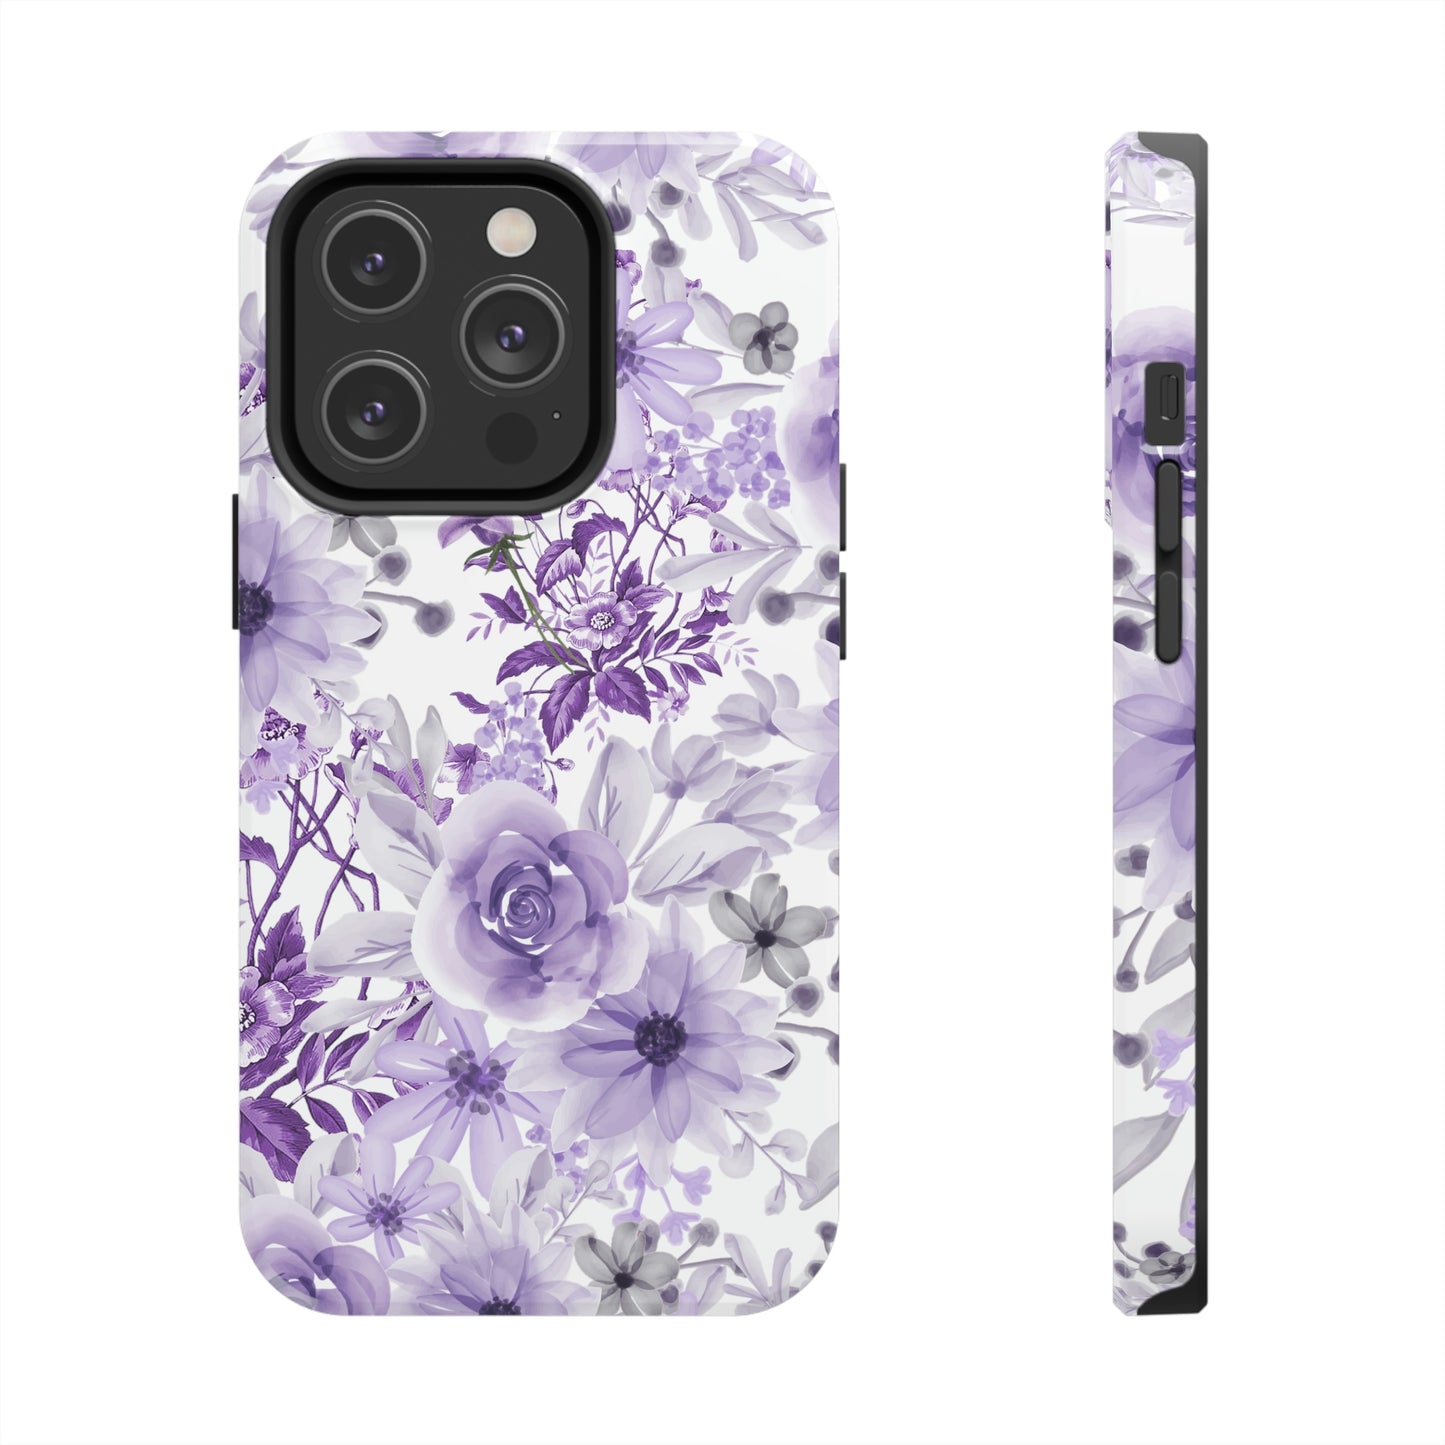 Purple IPhone Case / Floral Iphone Case